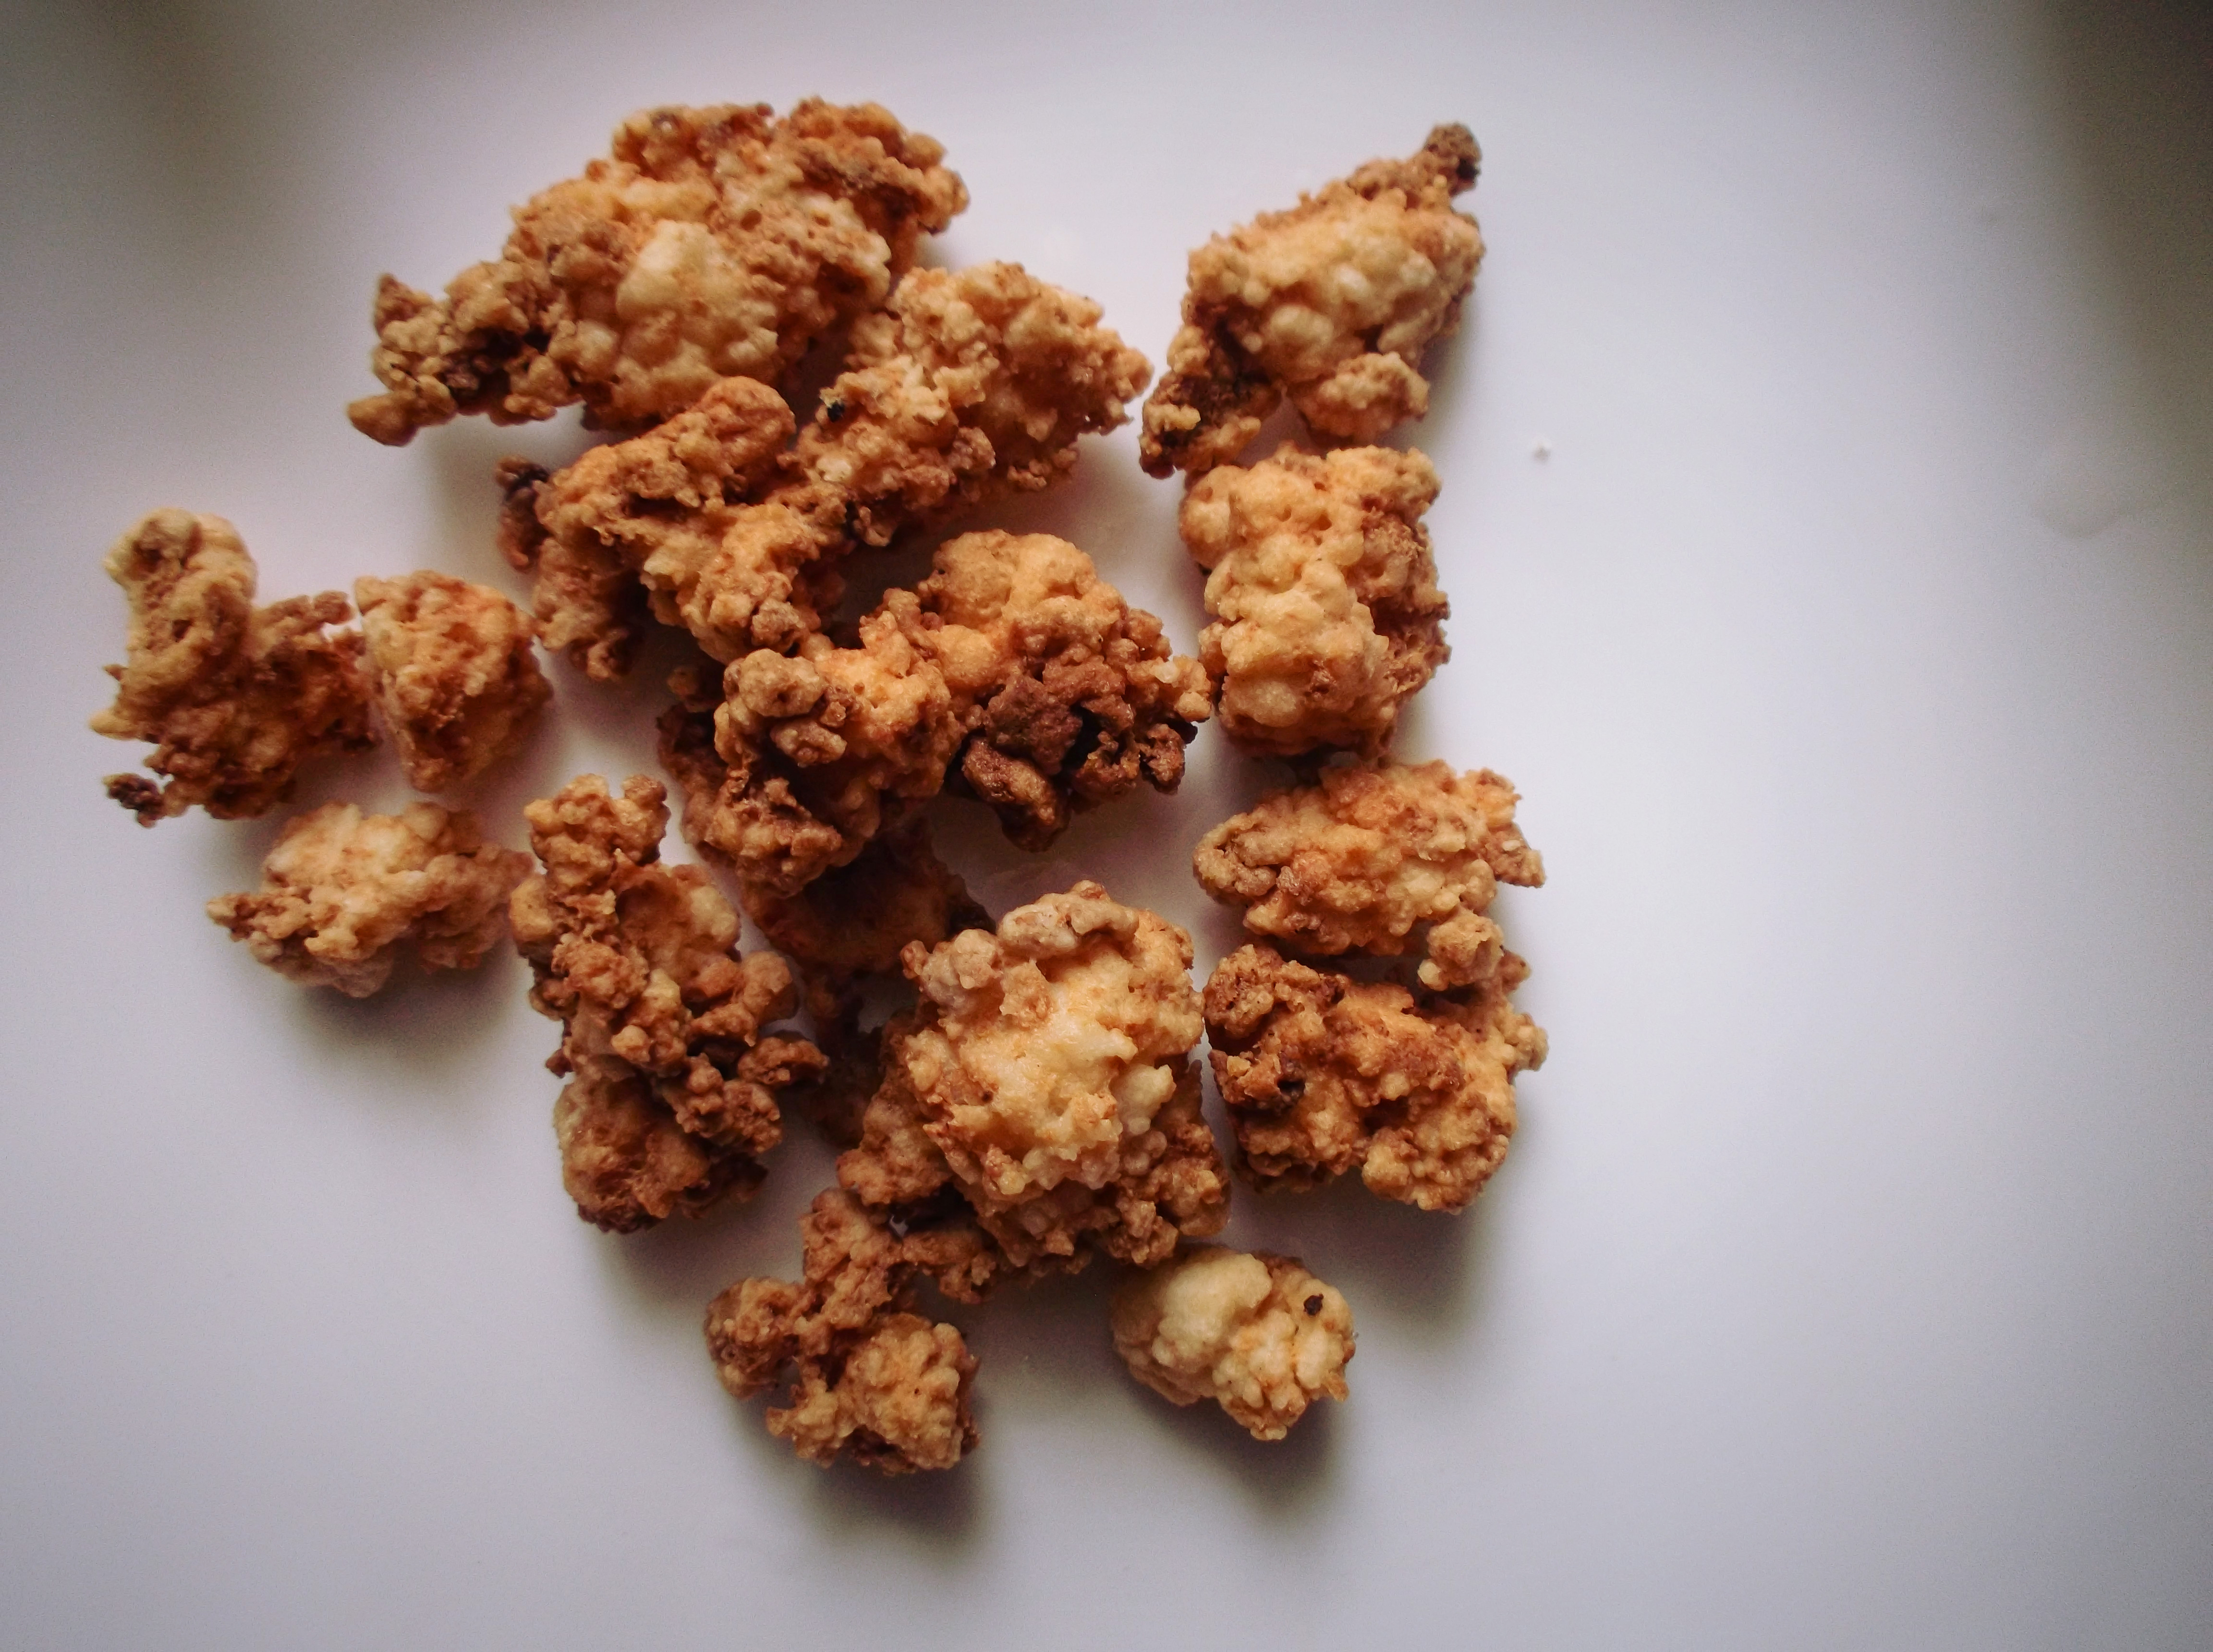 Tofu “Chicken” Popcorn